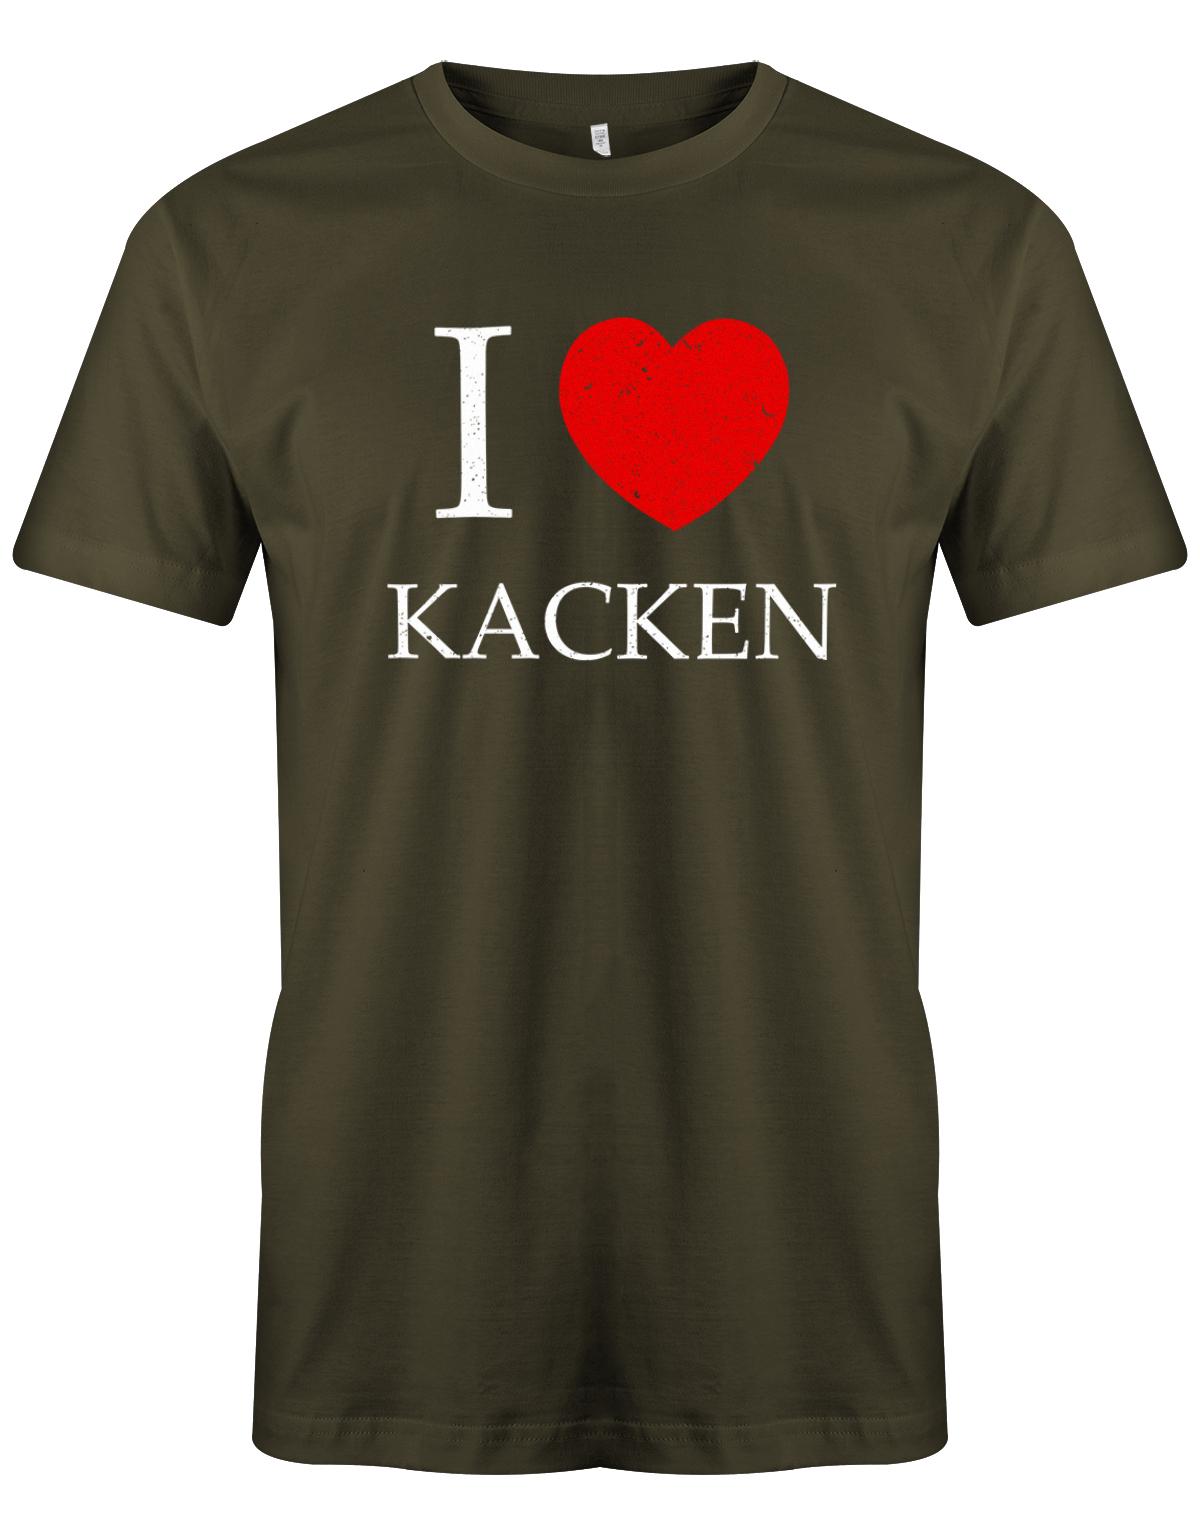 I-love-Kacken-Herrebn-SHirt-Army